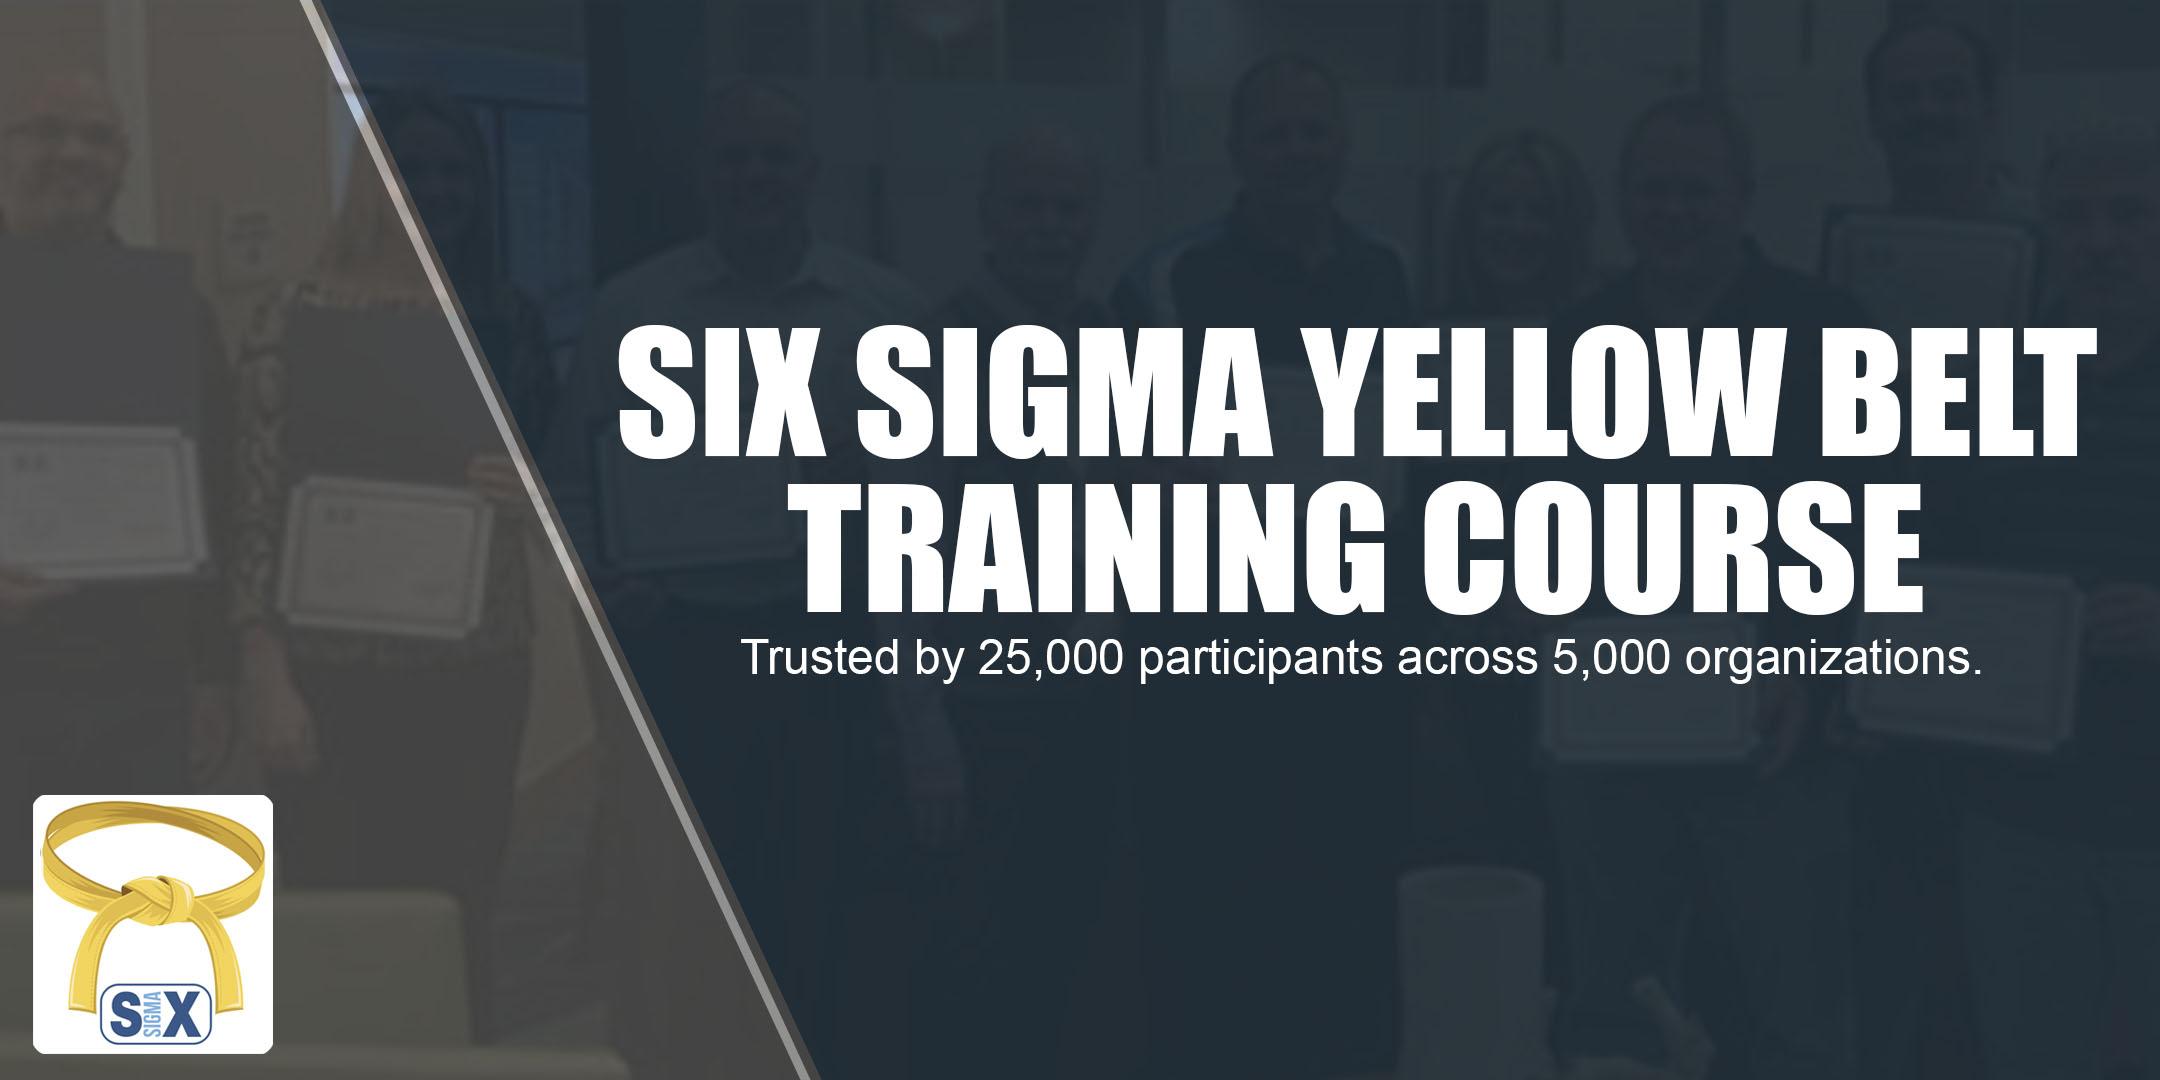 Six Sigma Yellow Belt Training Course